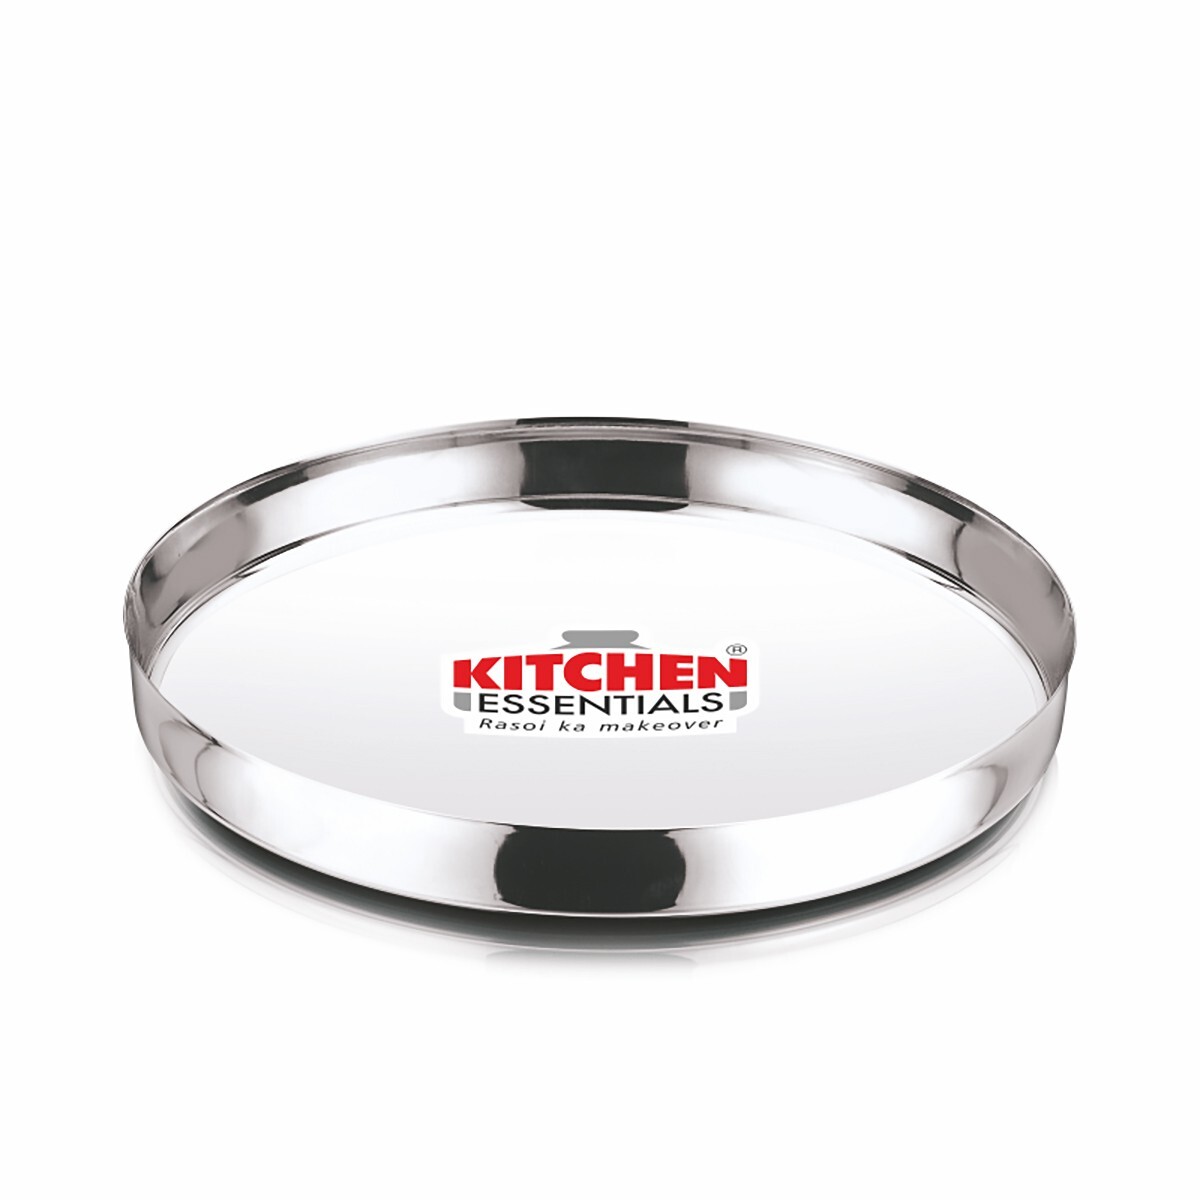 Kitchen Essential Stainless Steel Plate Sada Khomcha 15 M